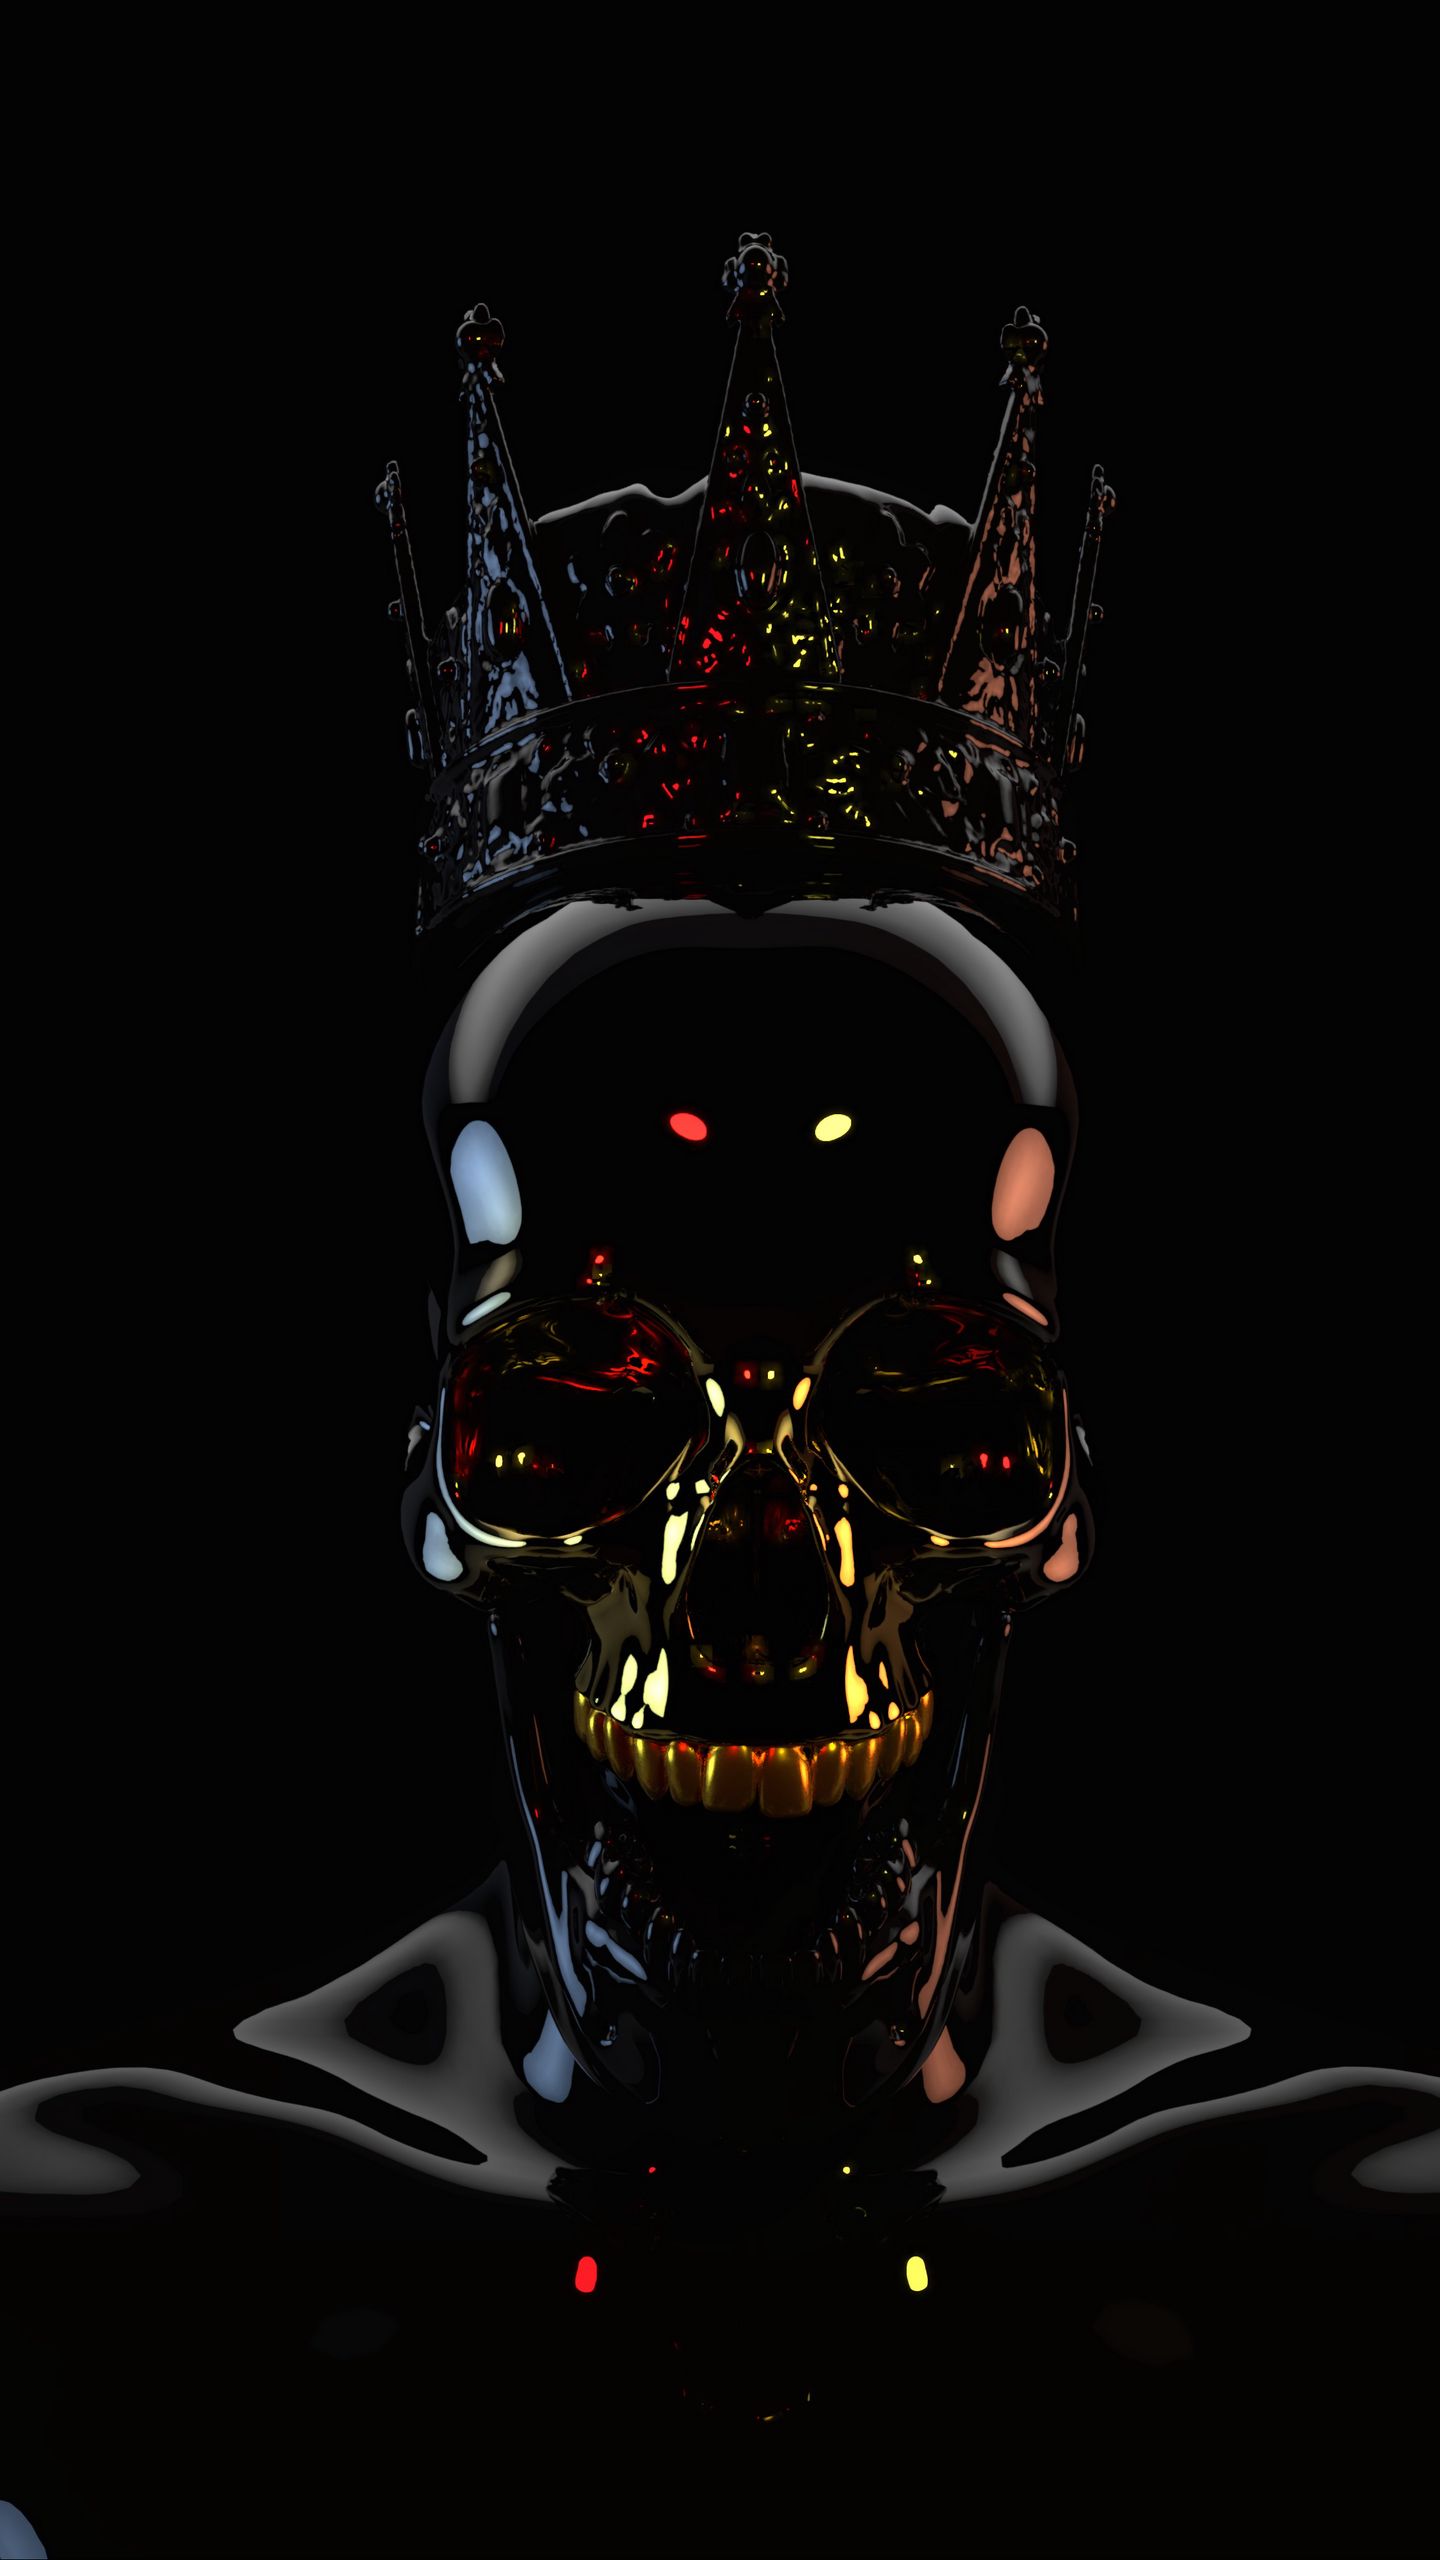 Download wallpaper 1440x2560 skull, black, dark, crown, 3d qhd samsung  galaxy s6, s7, edge, note, lg g4 hd background